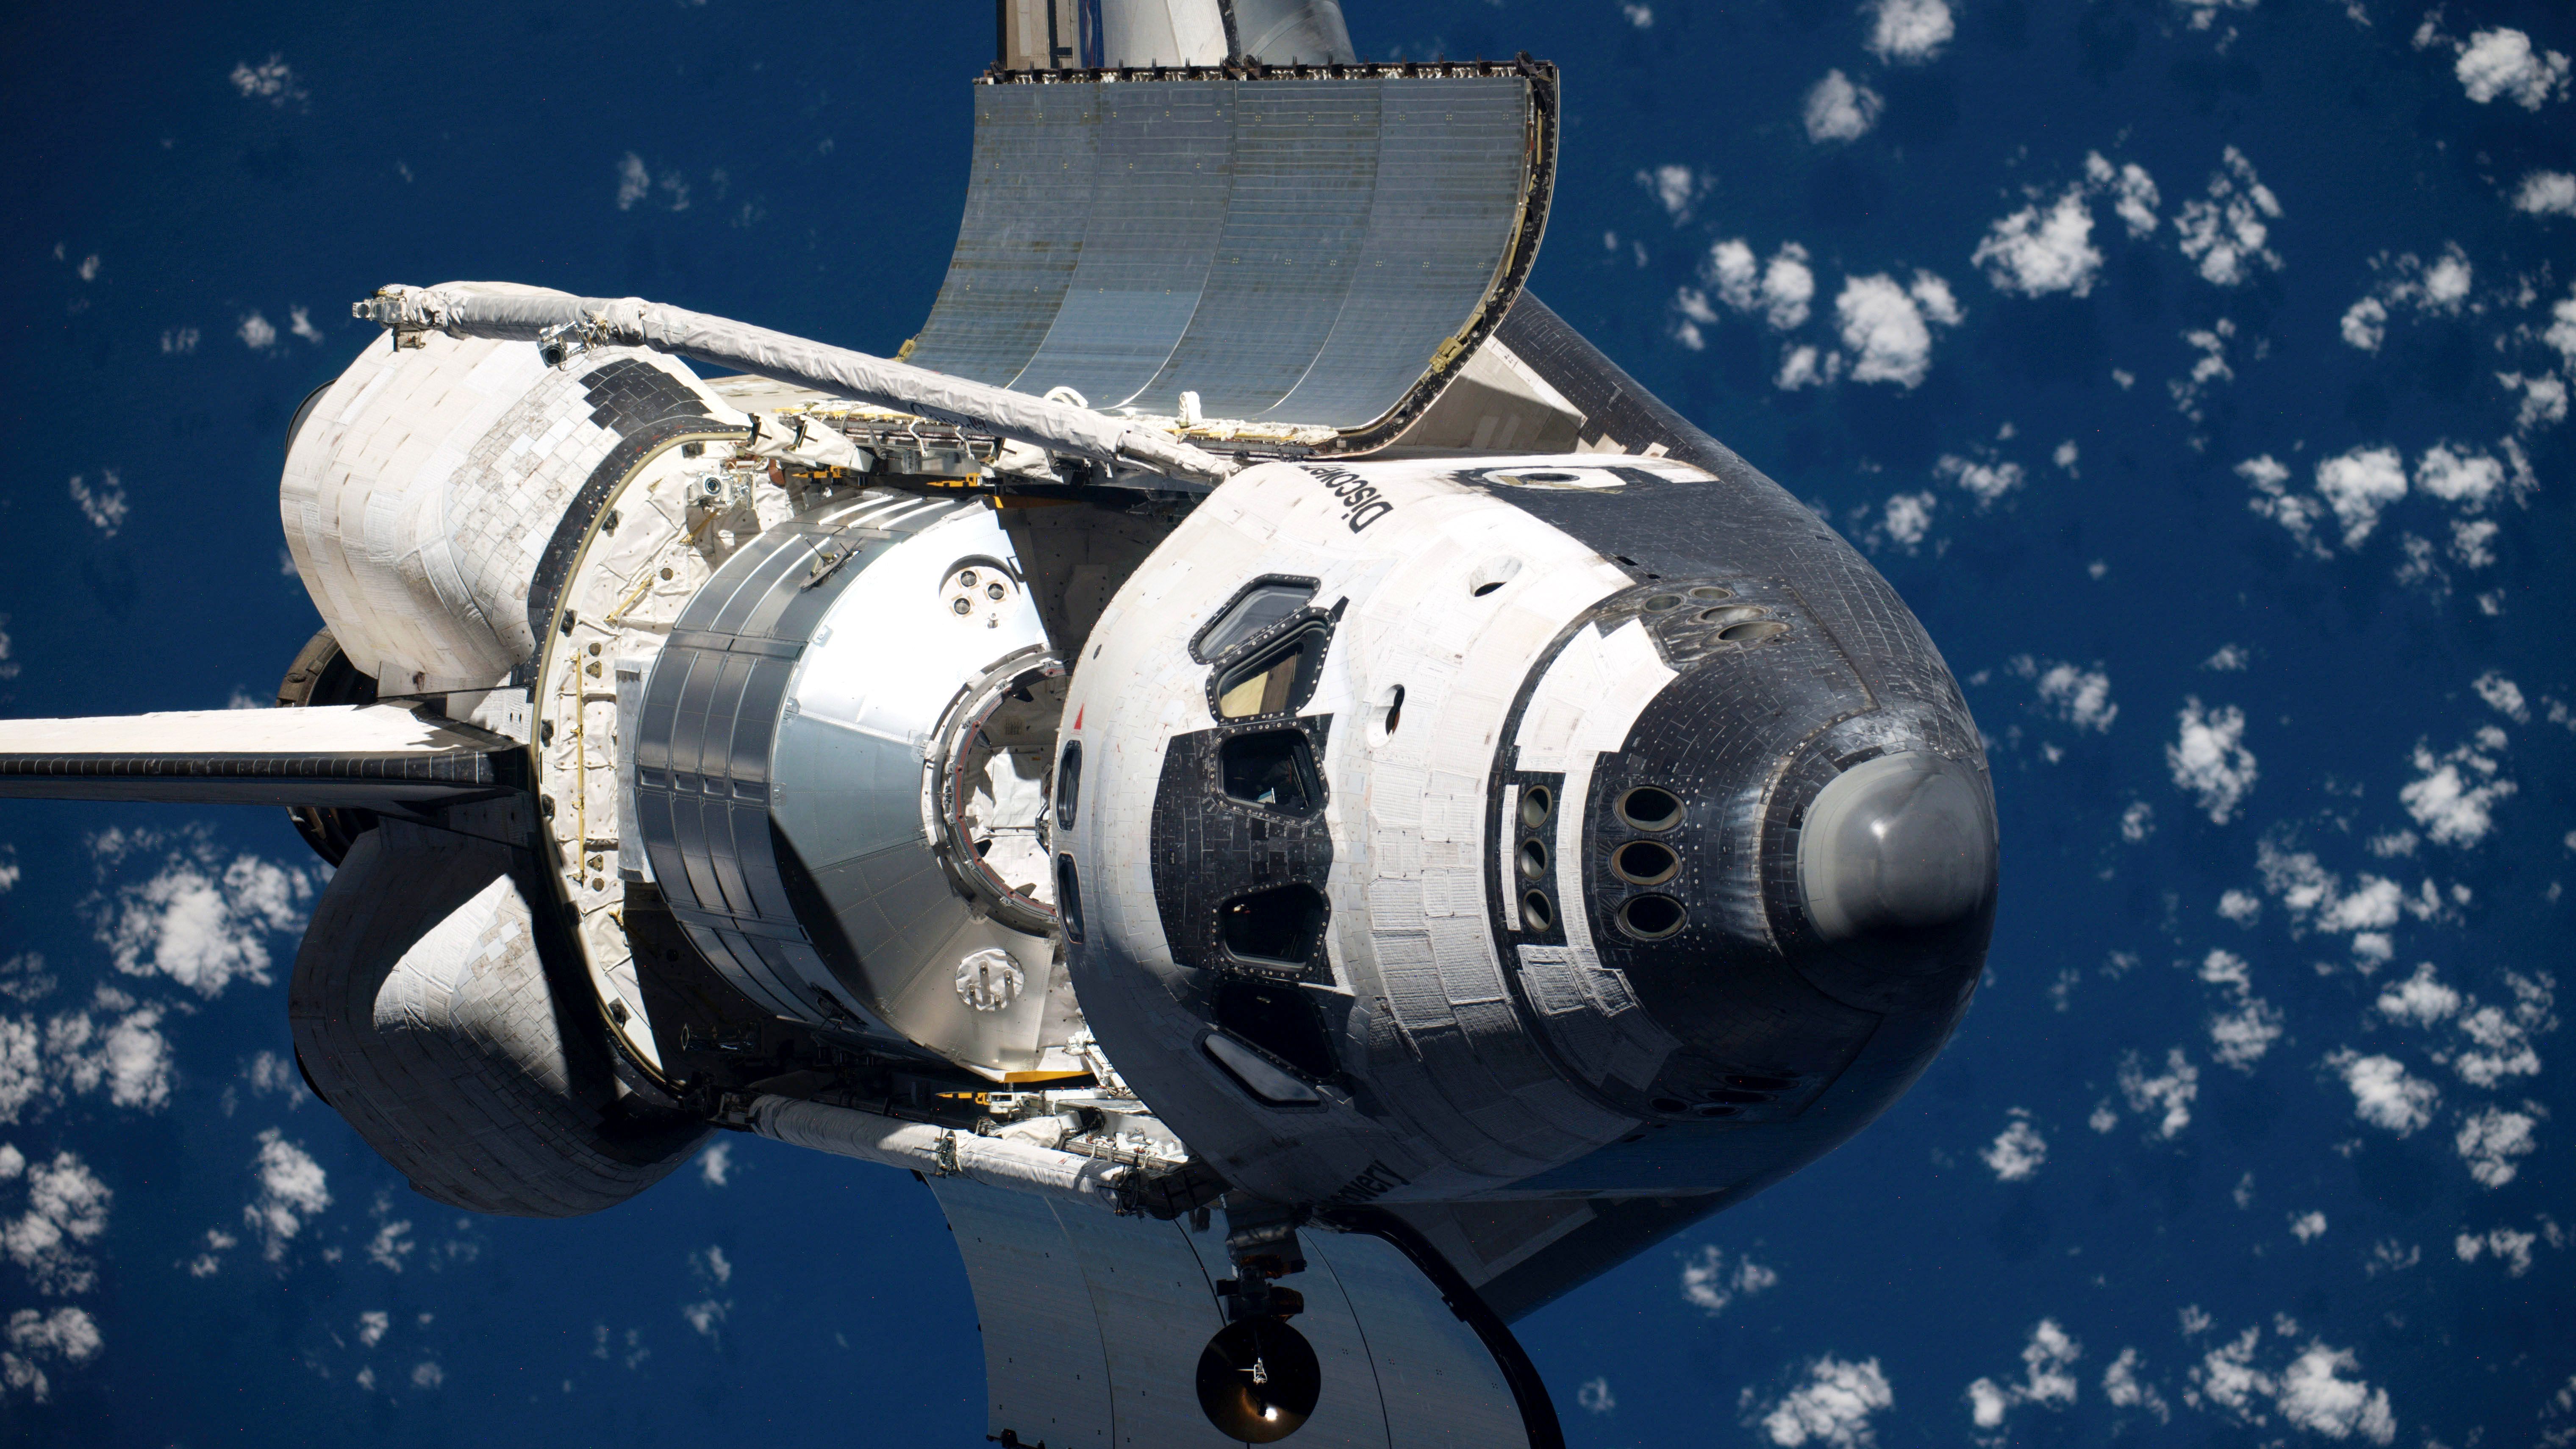 NASA's space shuttle program reimagined rocketry. What went wrong? | CNN